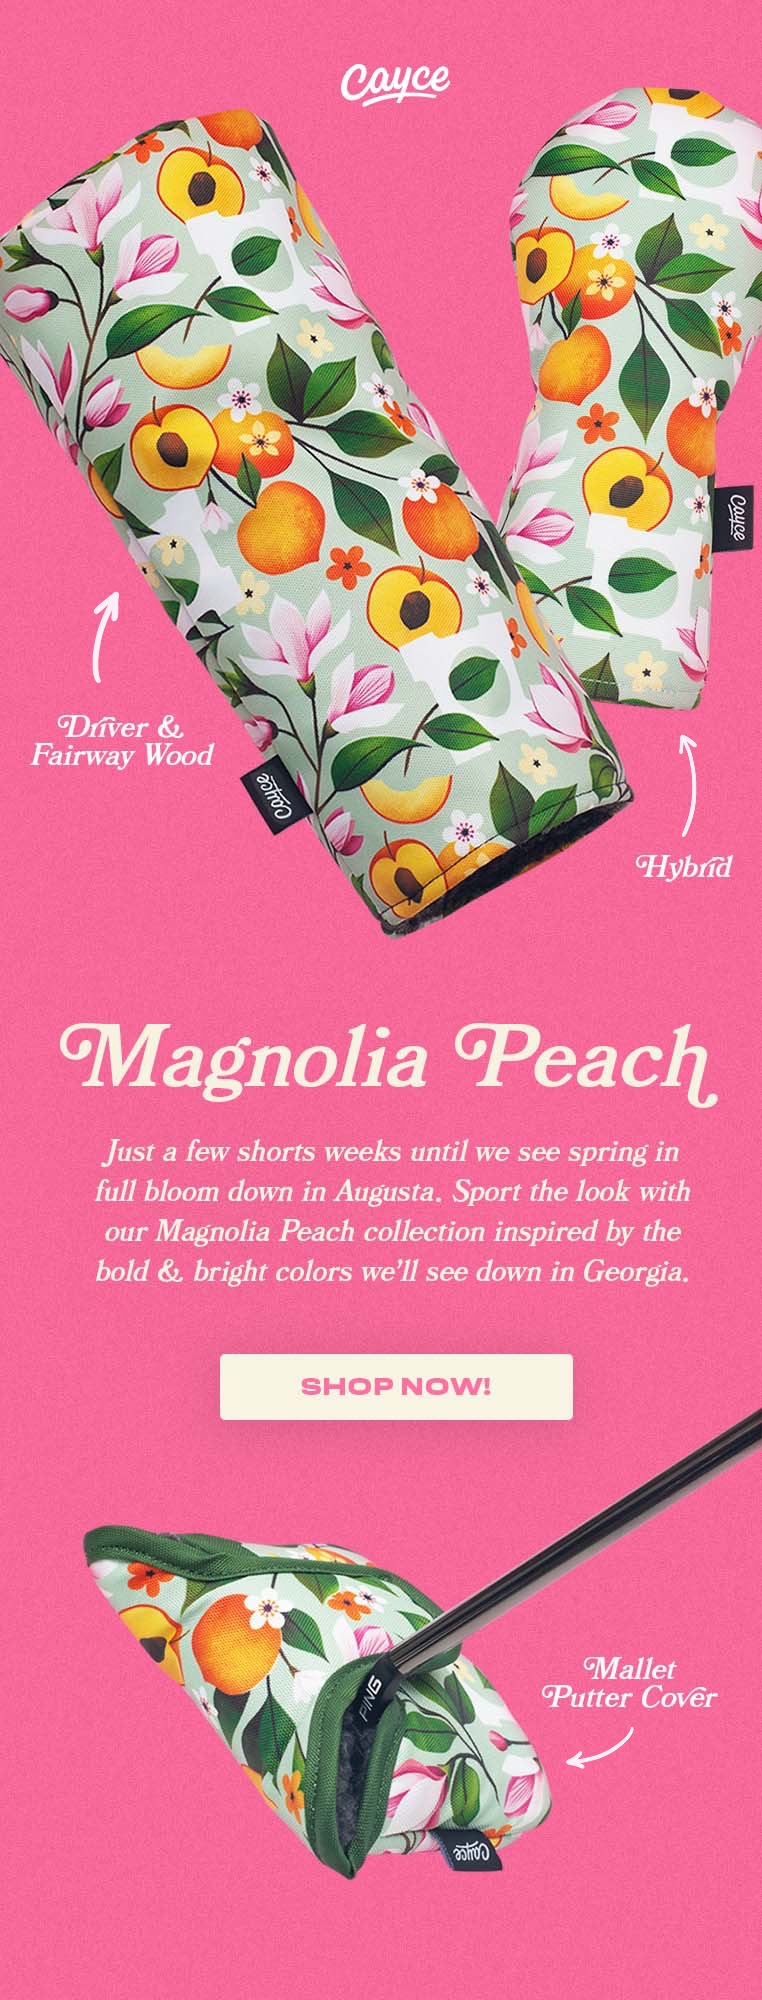 Magnolia Peach Headcover Collection